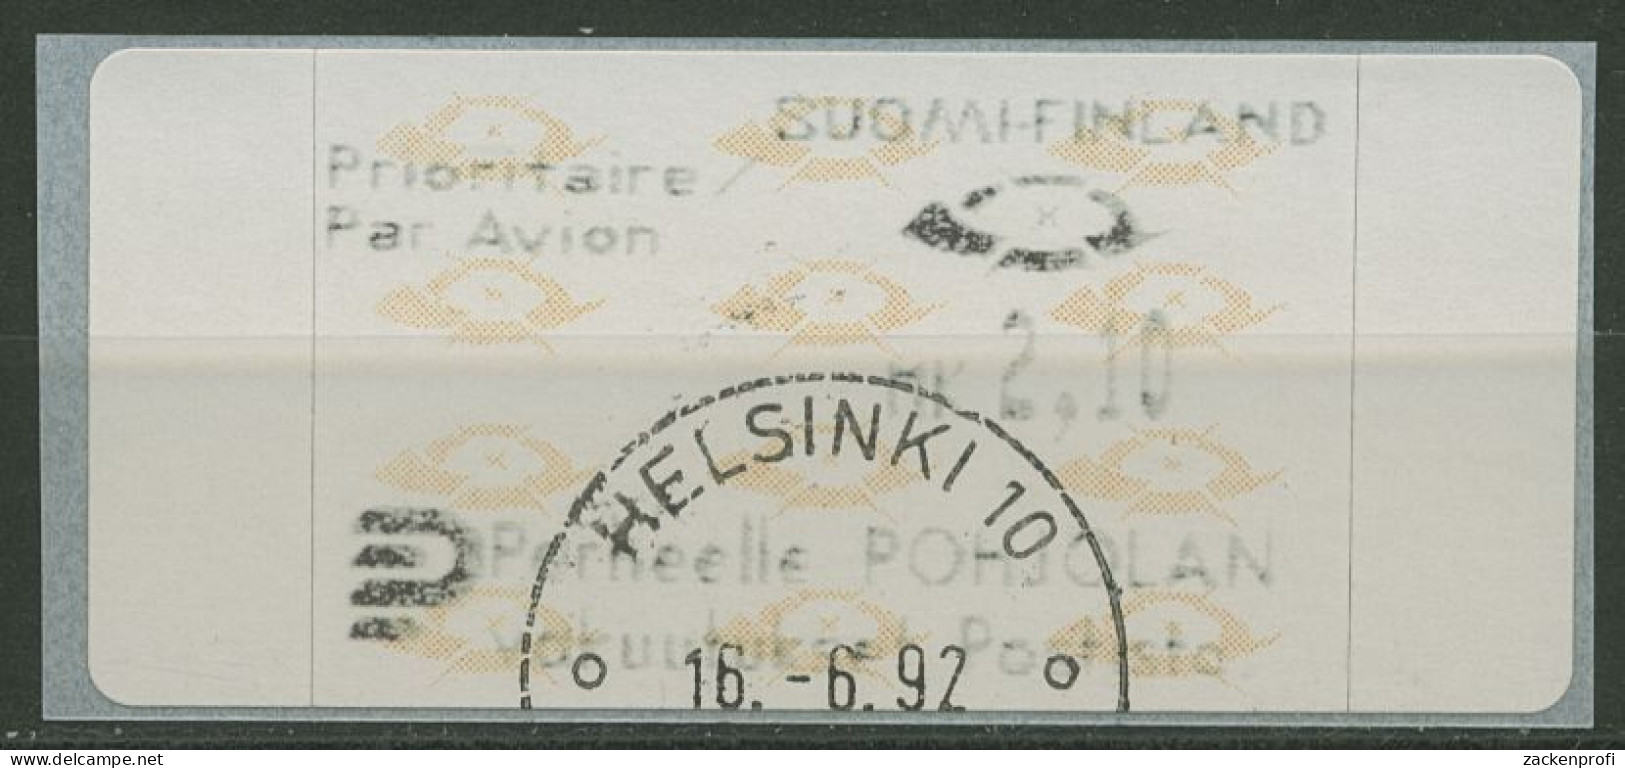 Finnland Automatenmarken 1992 Posthörner Einzelwert ATM 12.3 Z6 Gestempelt - Viñetas De Franqueo [ATM]